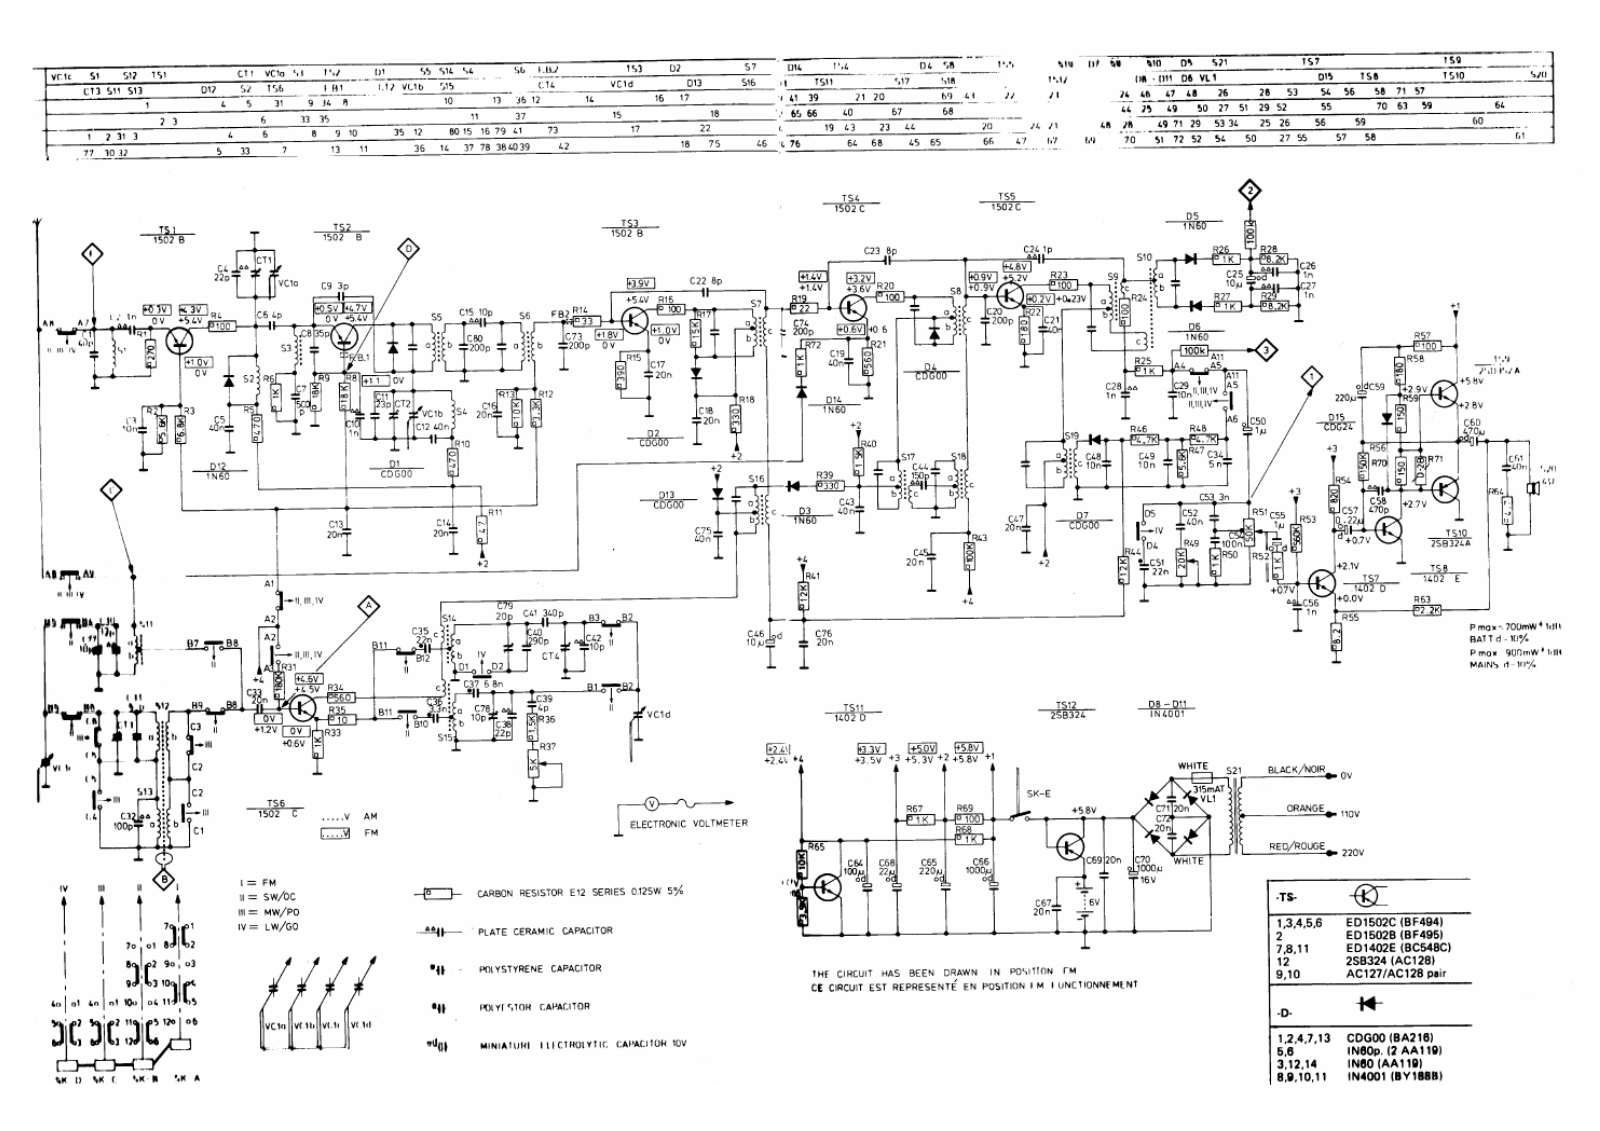 Philips 90al680 schematic